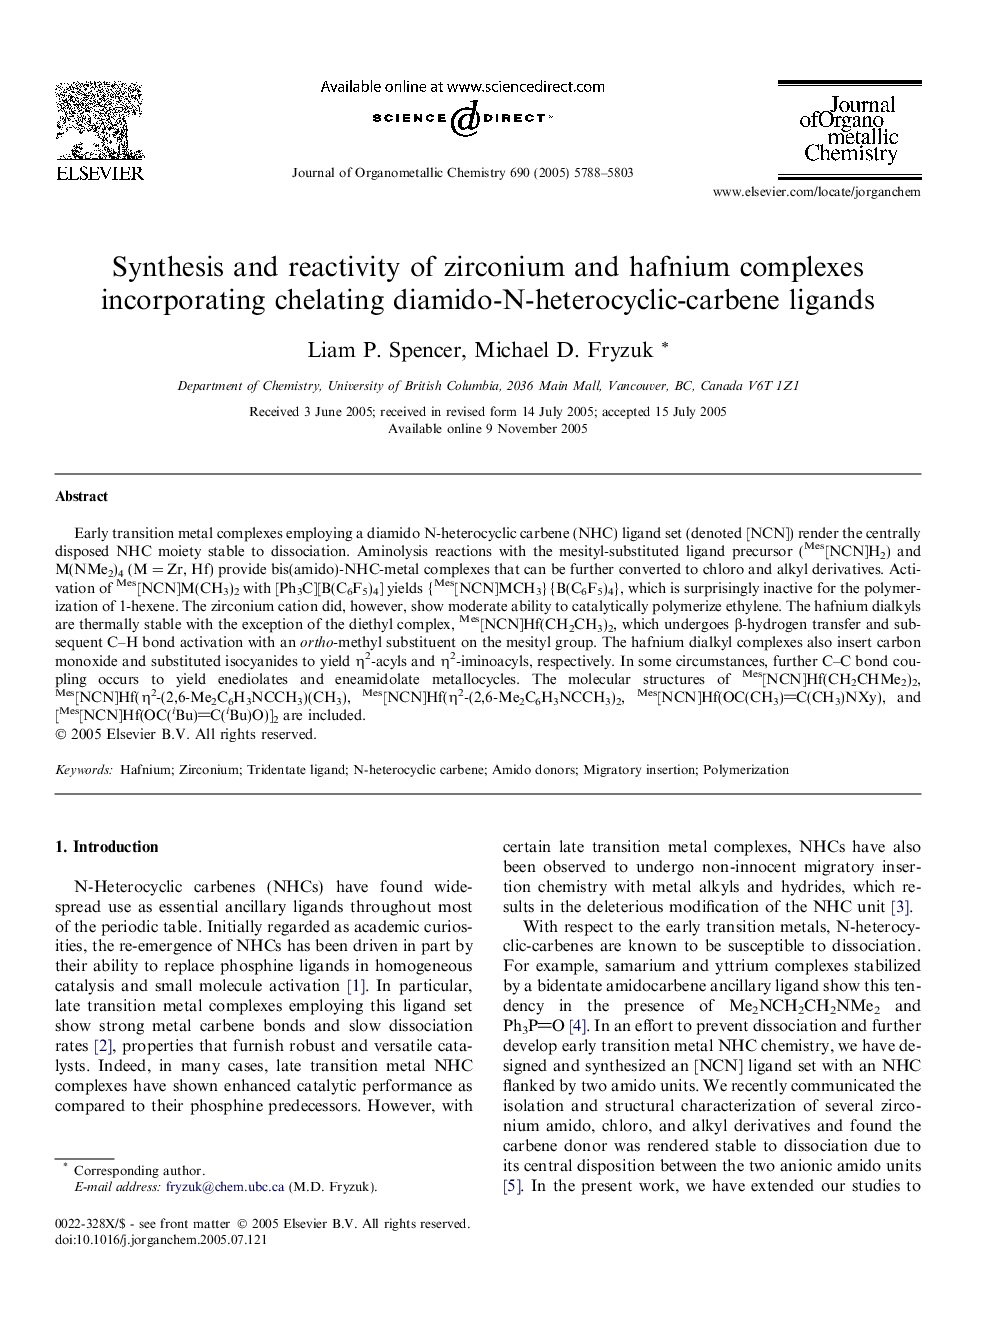 Synthesis and reactivity of zirconium and hafnium complexes incorporating chelating diamido-N-heterocyclic-carbene ligands